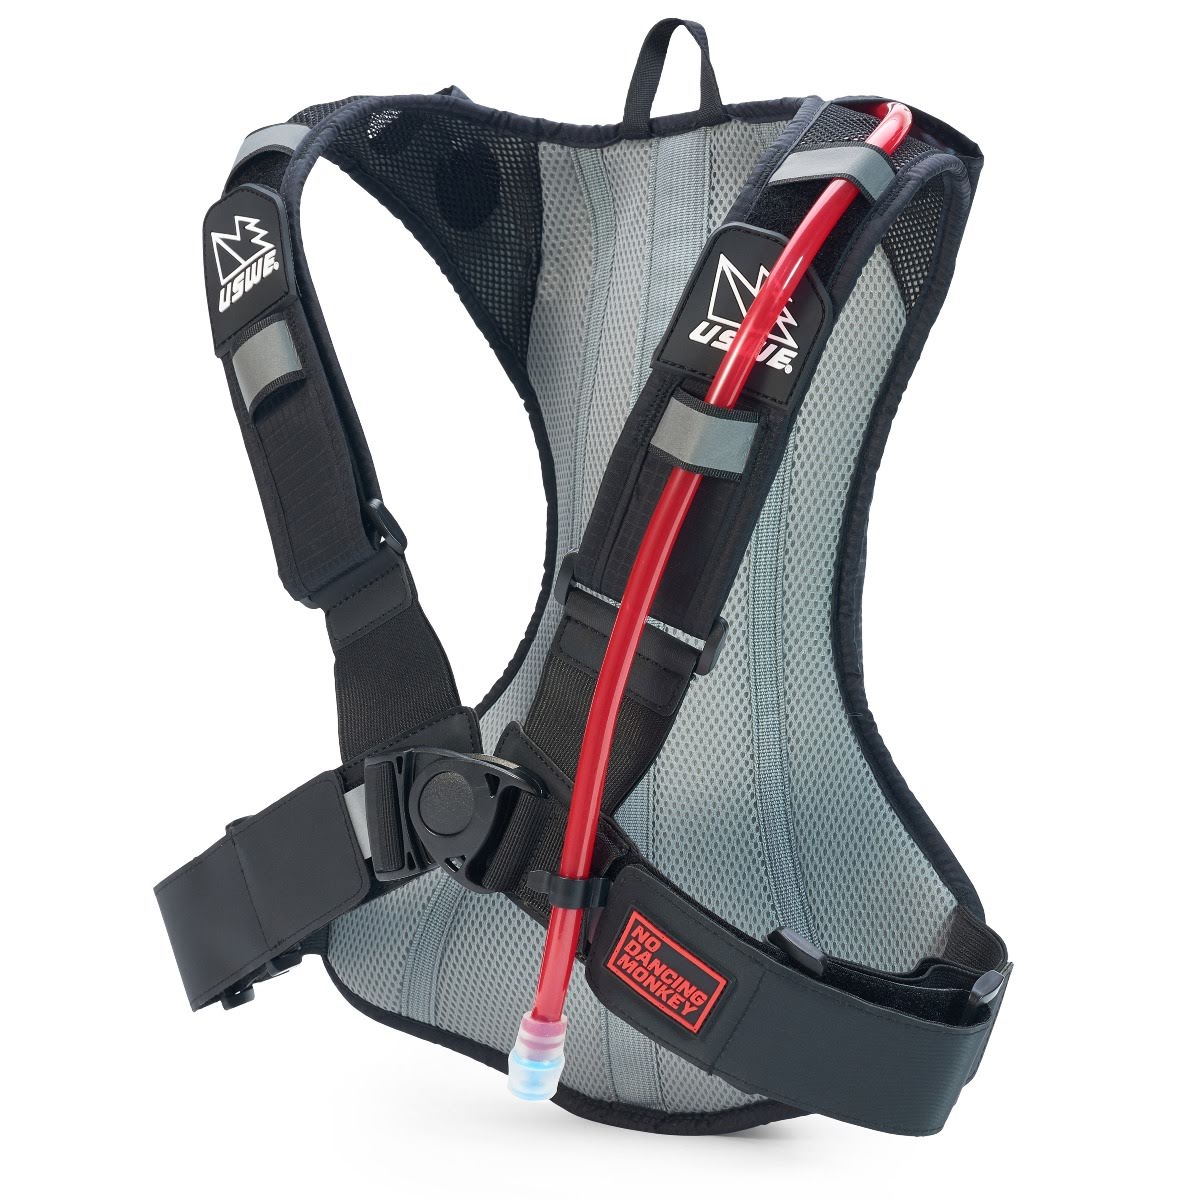 USWE - Outlander 4 Hydration Backpack